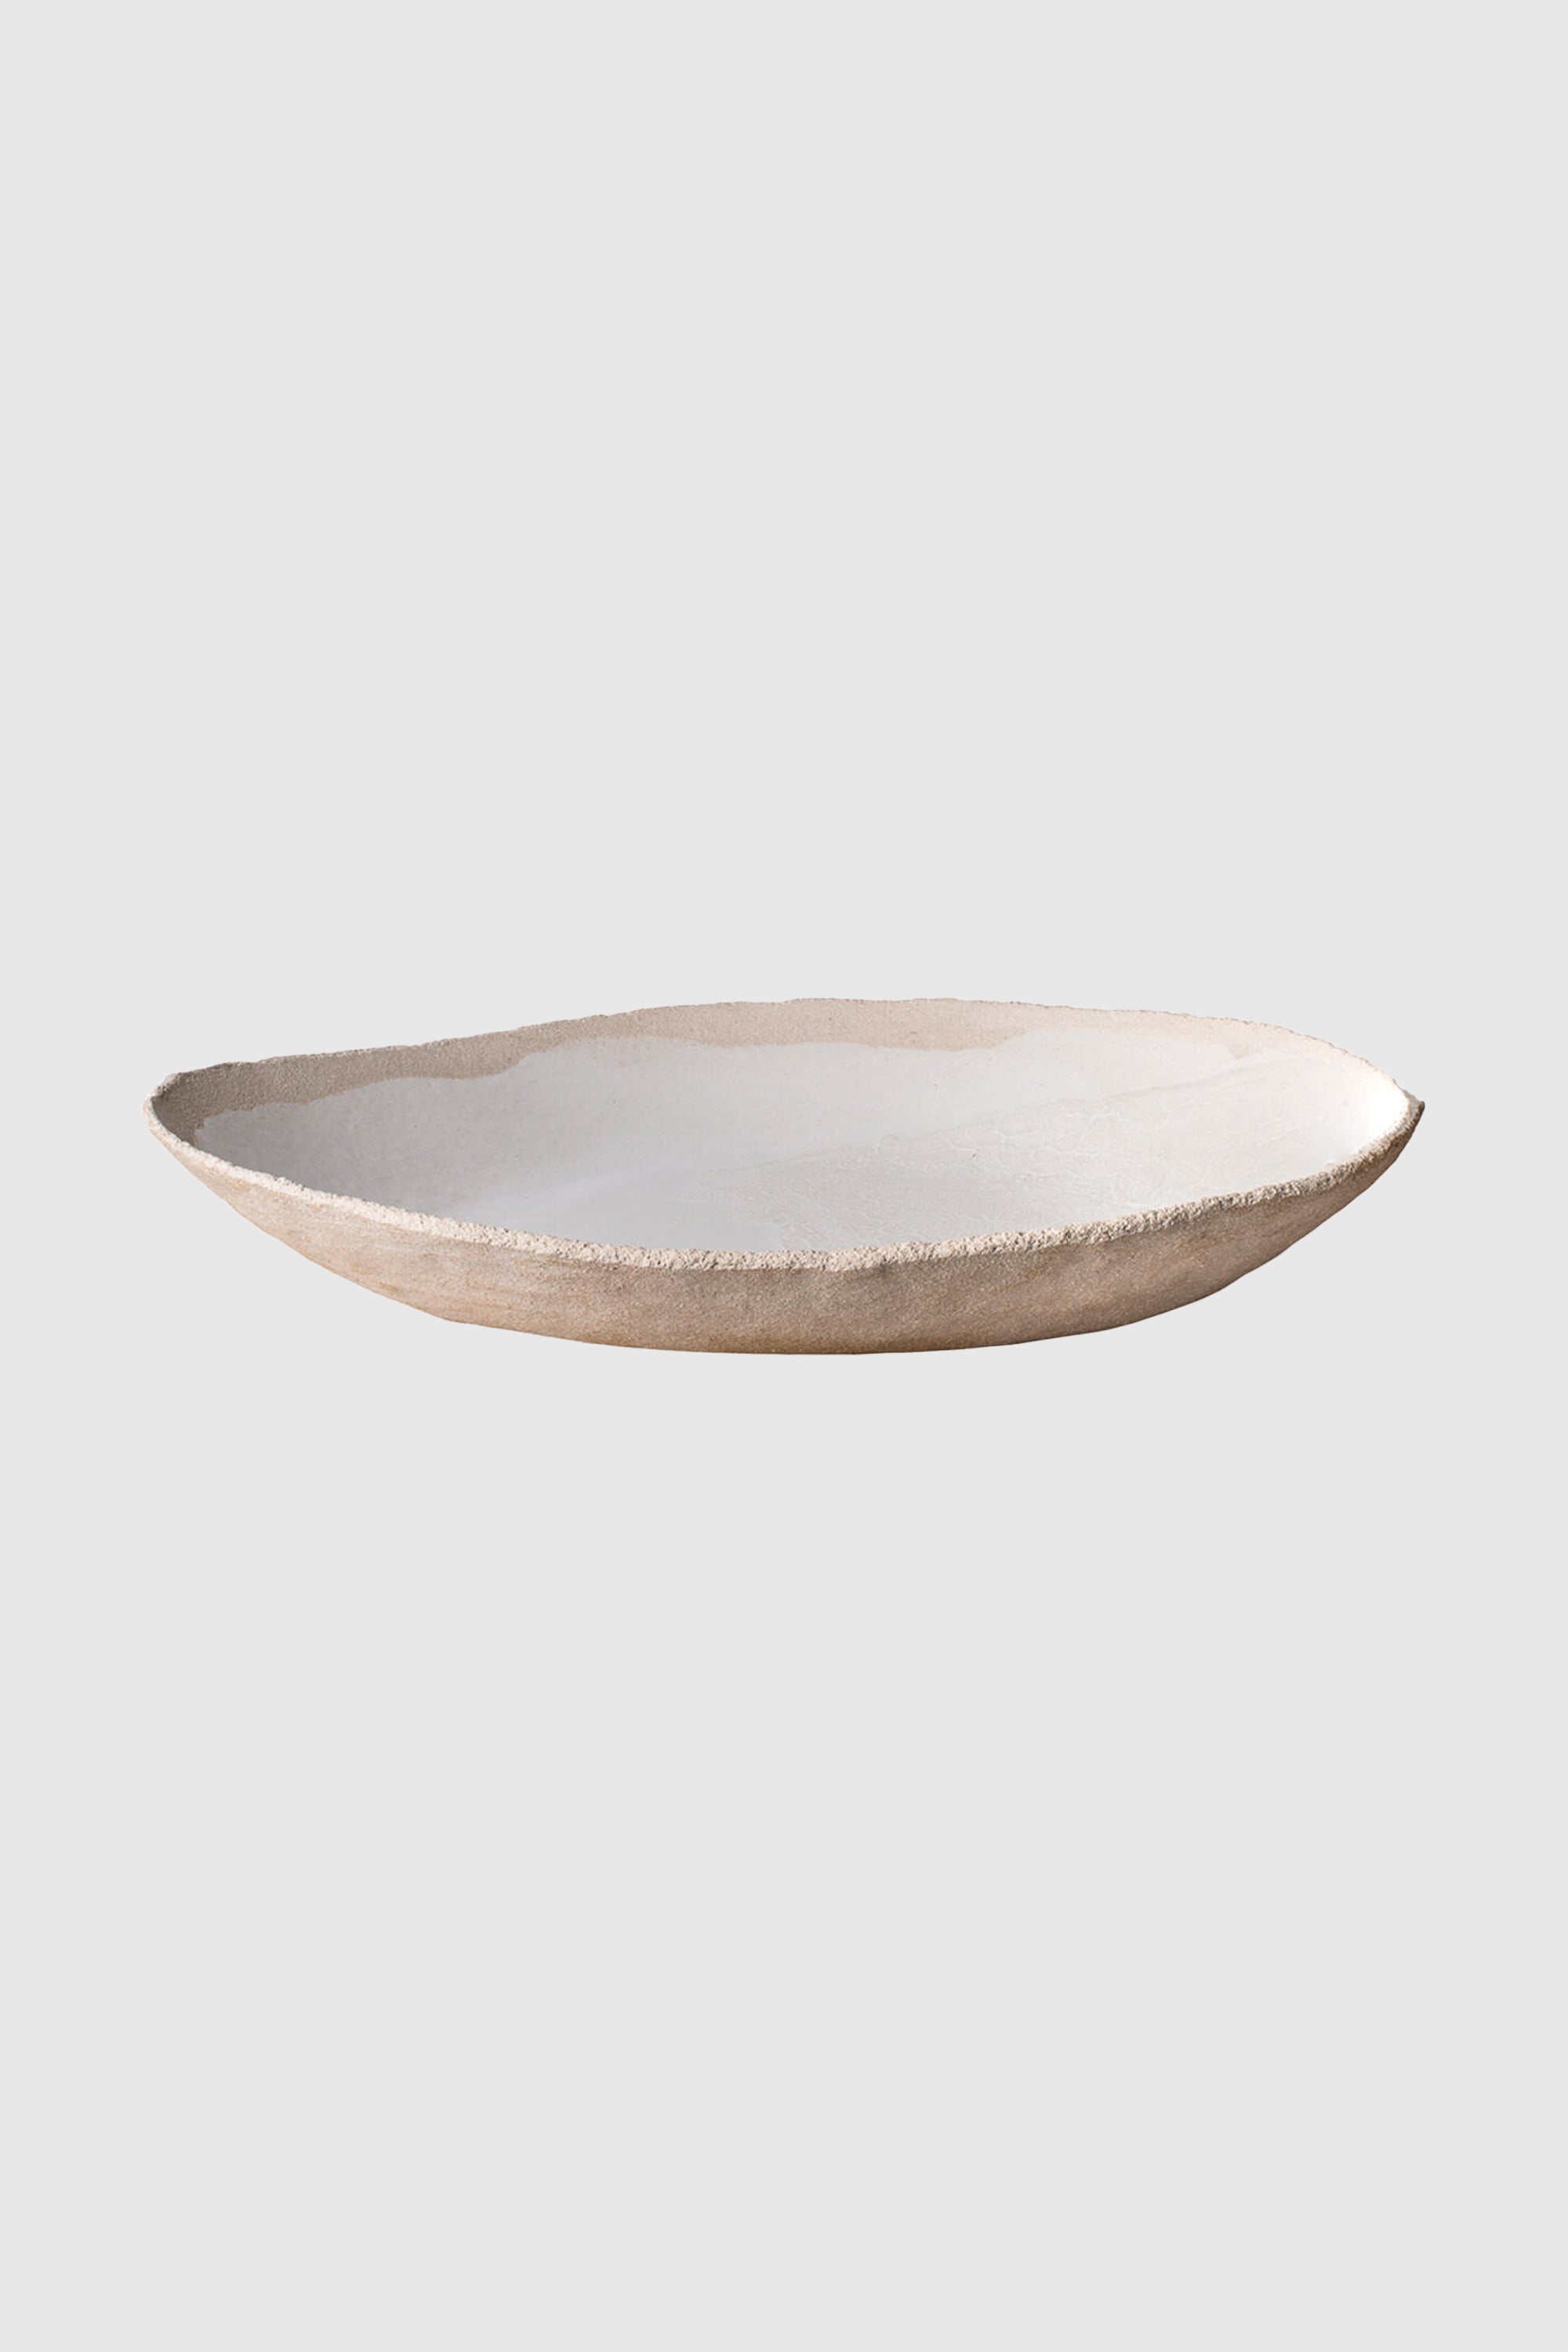 Wabi Large Oval Serving Dish in Blanc